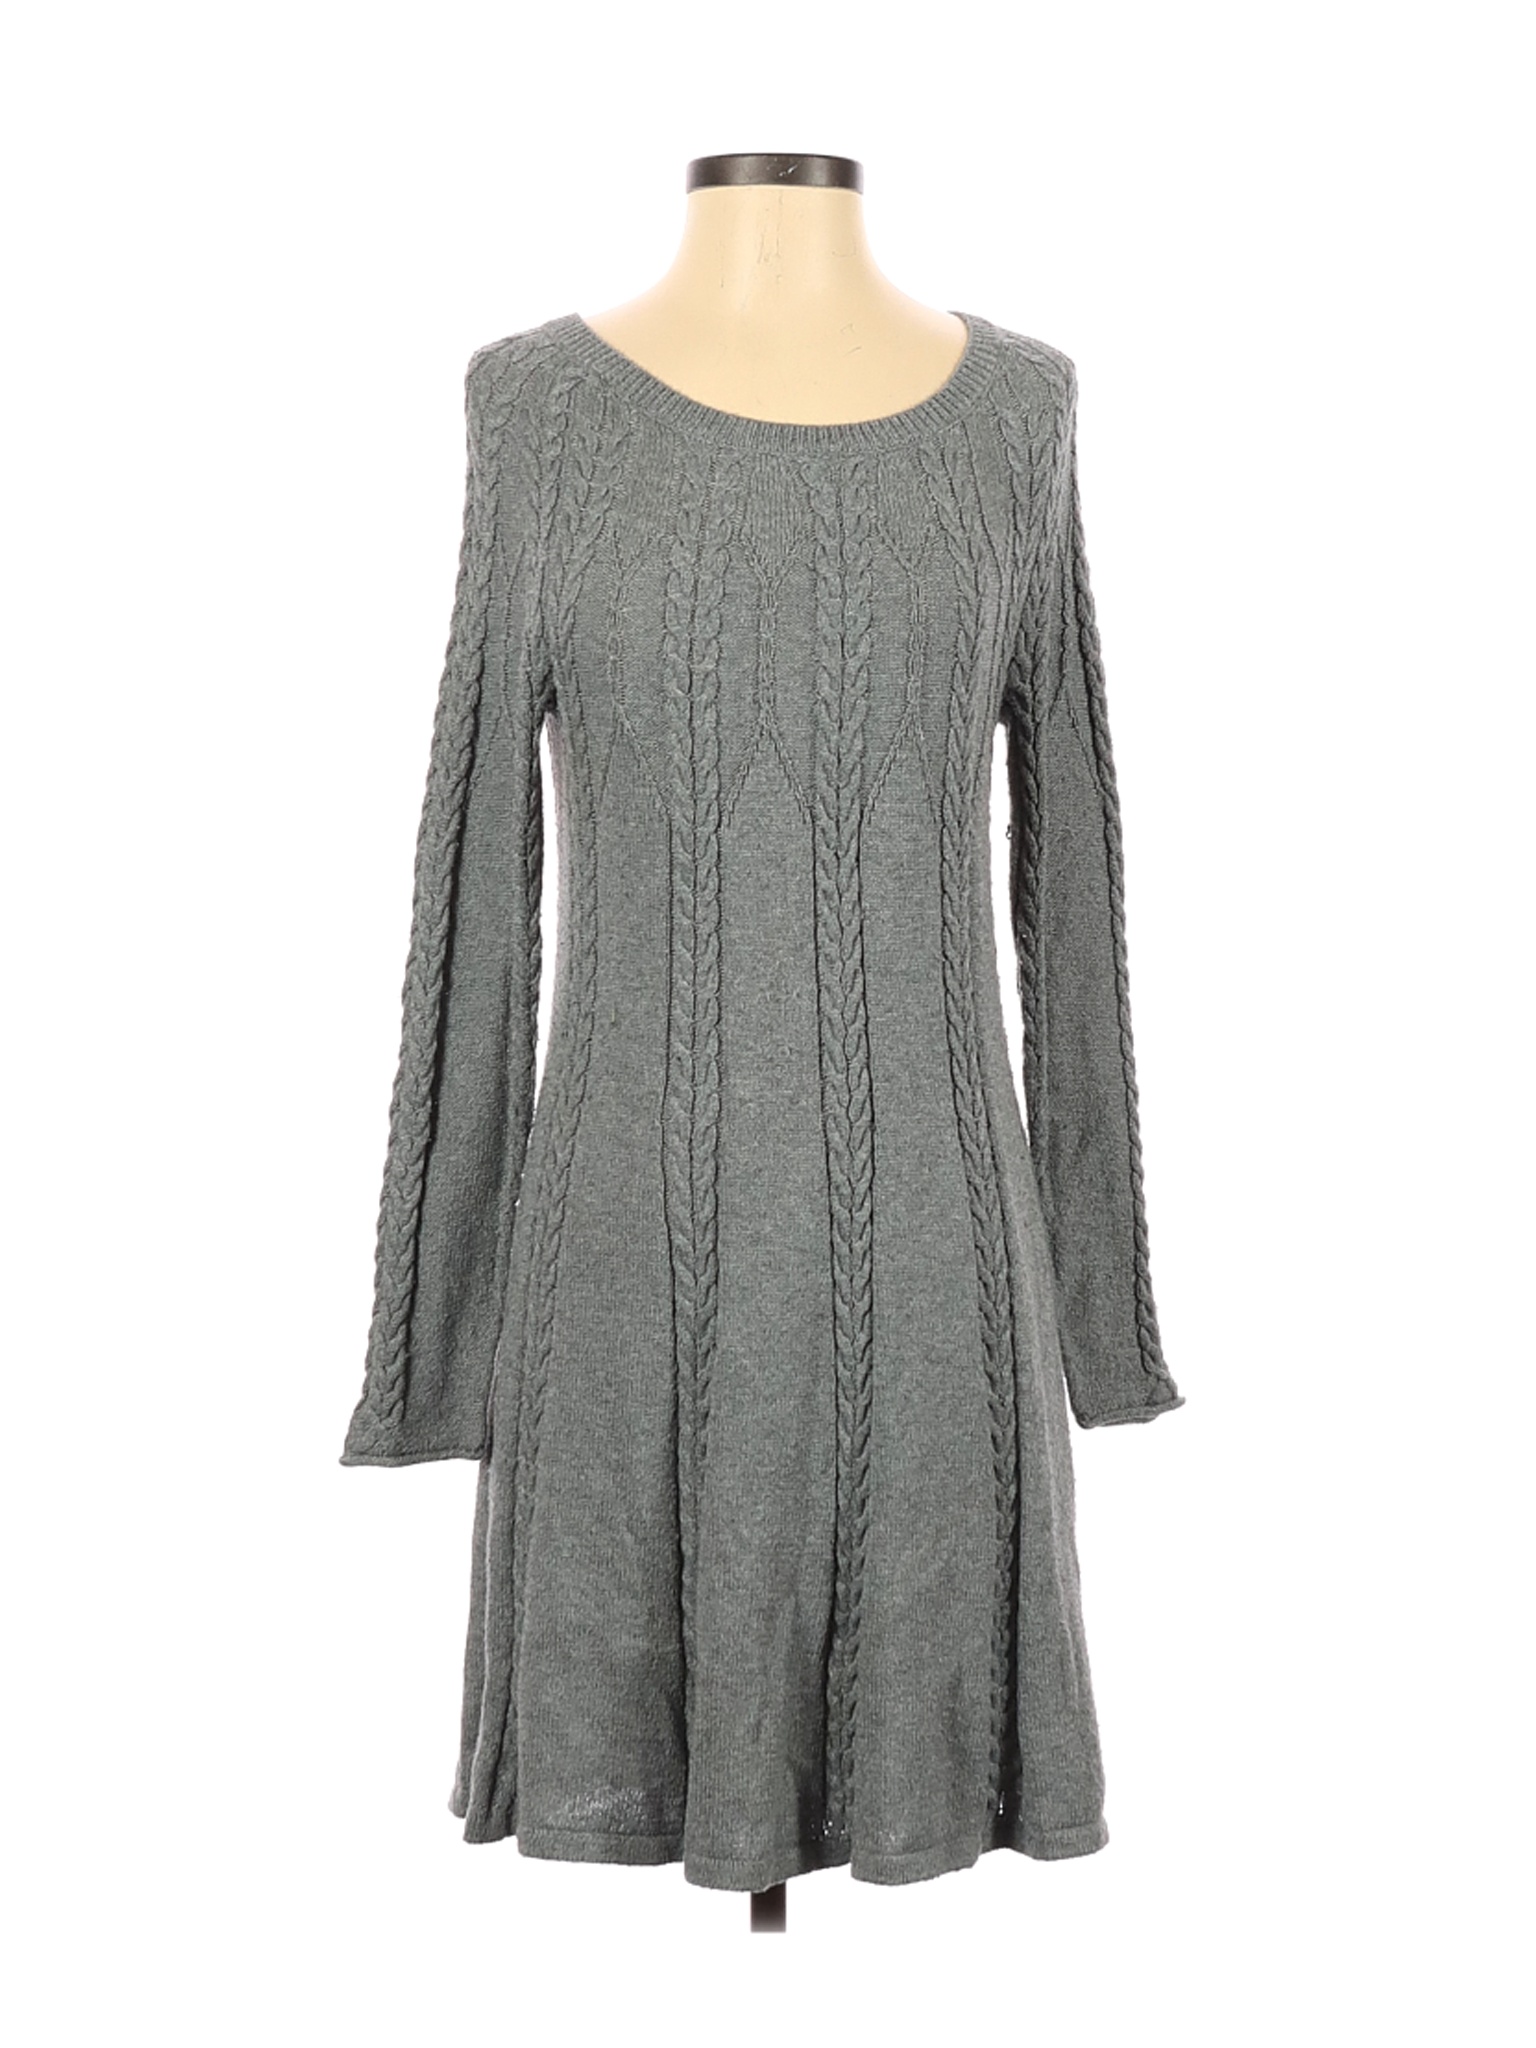 Old Navy Women Gray Casual Dress S | eBay